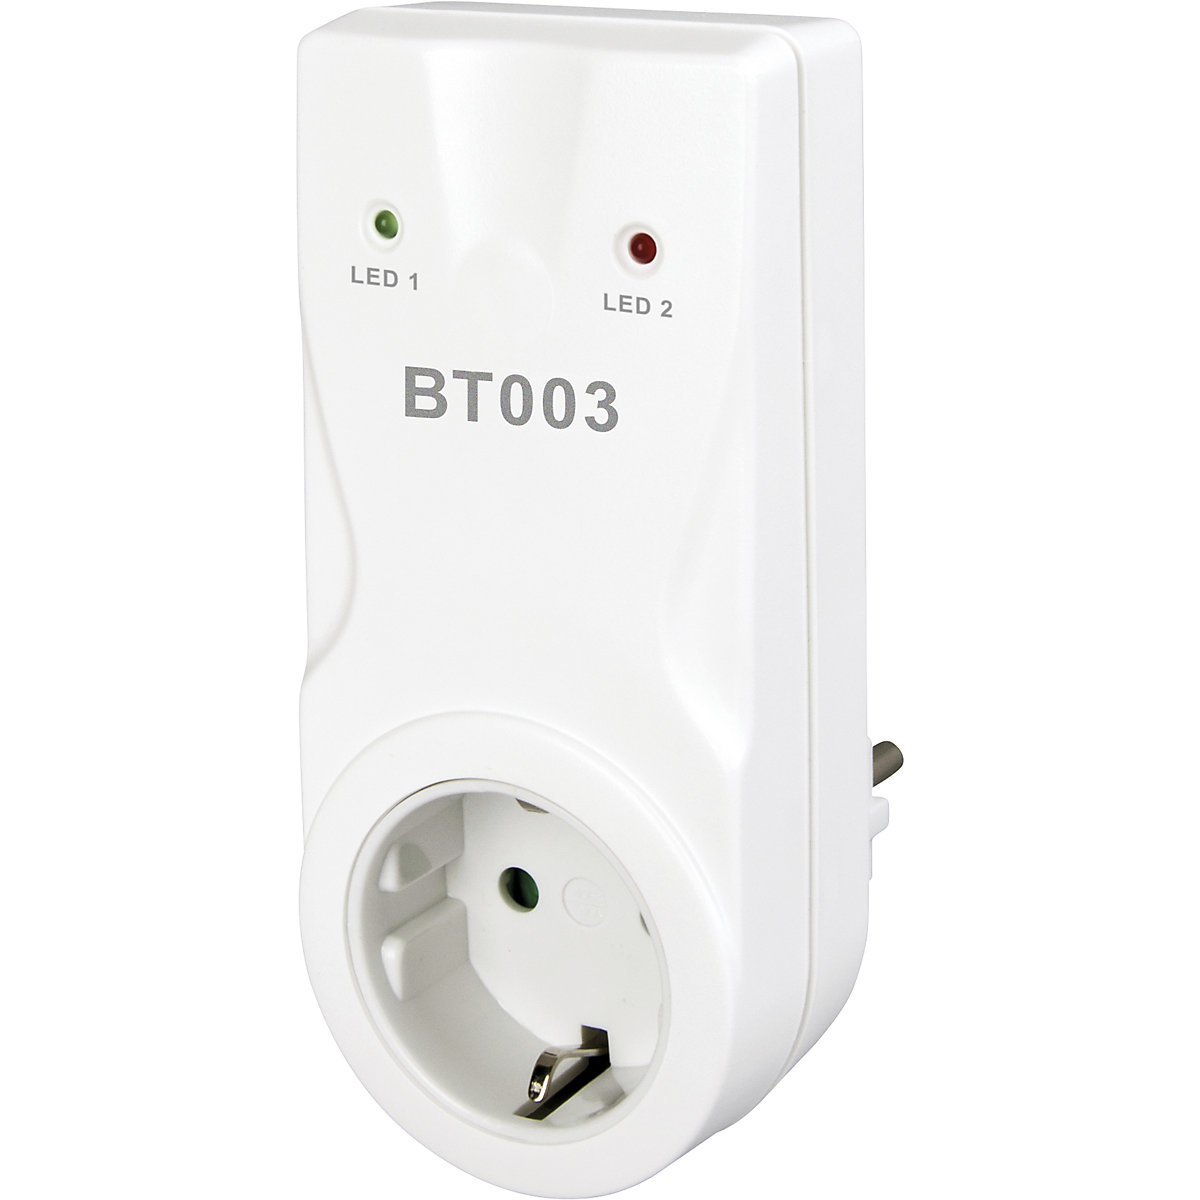 BT003 plug-in socket